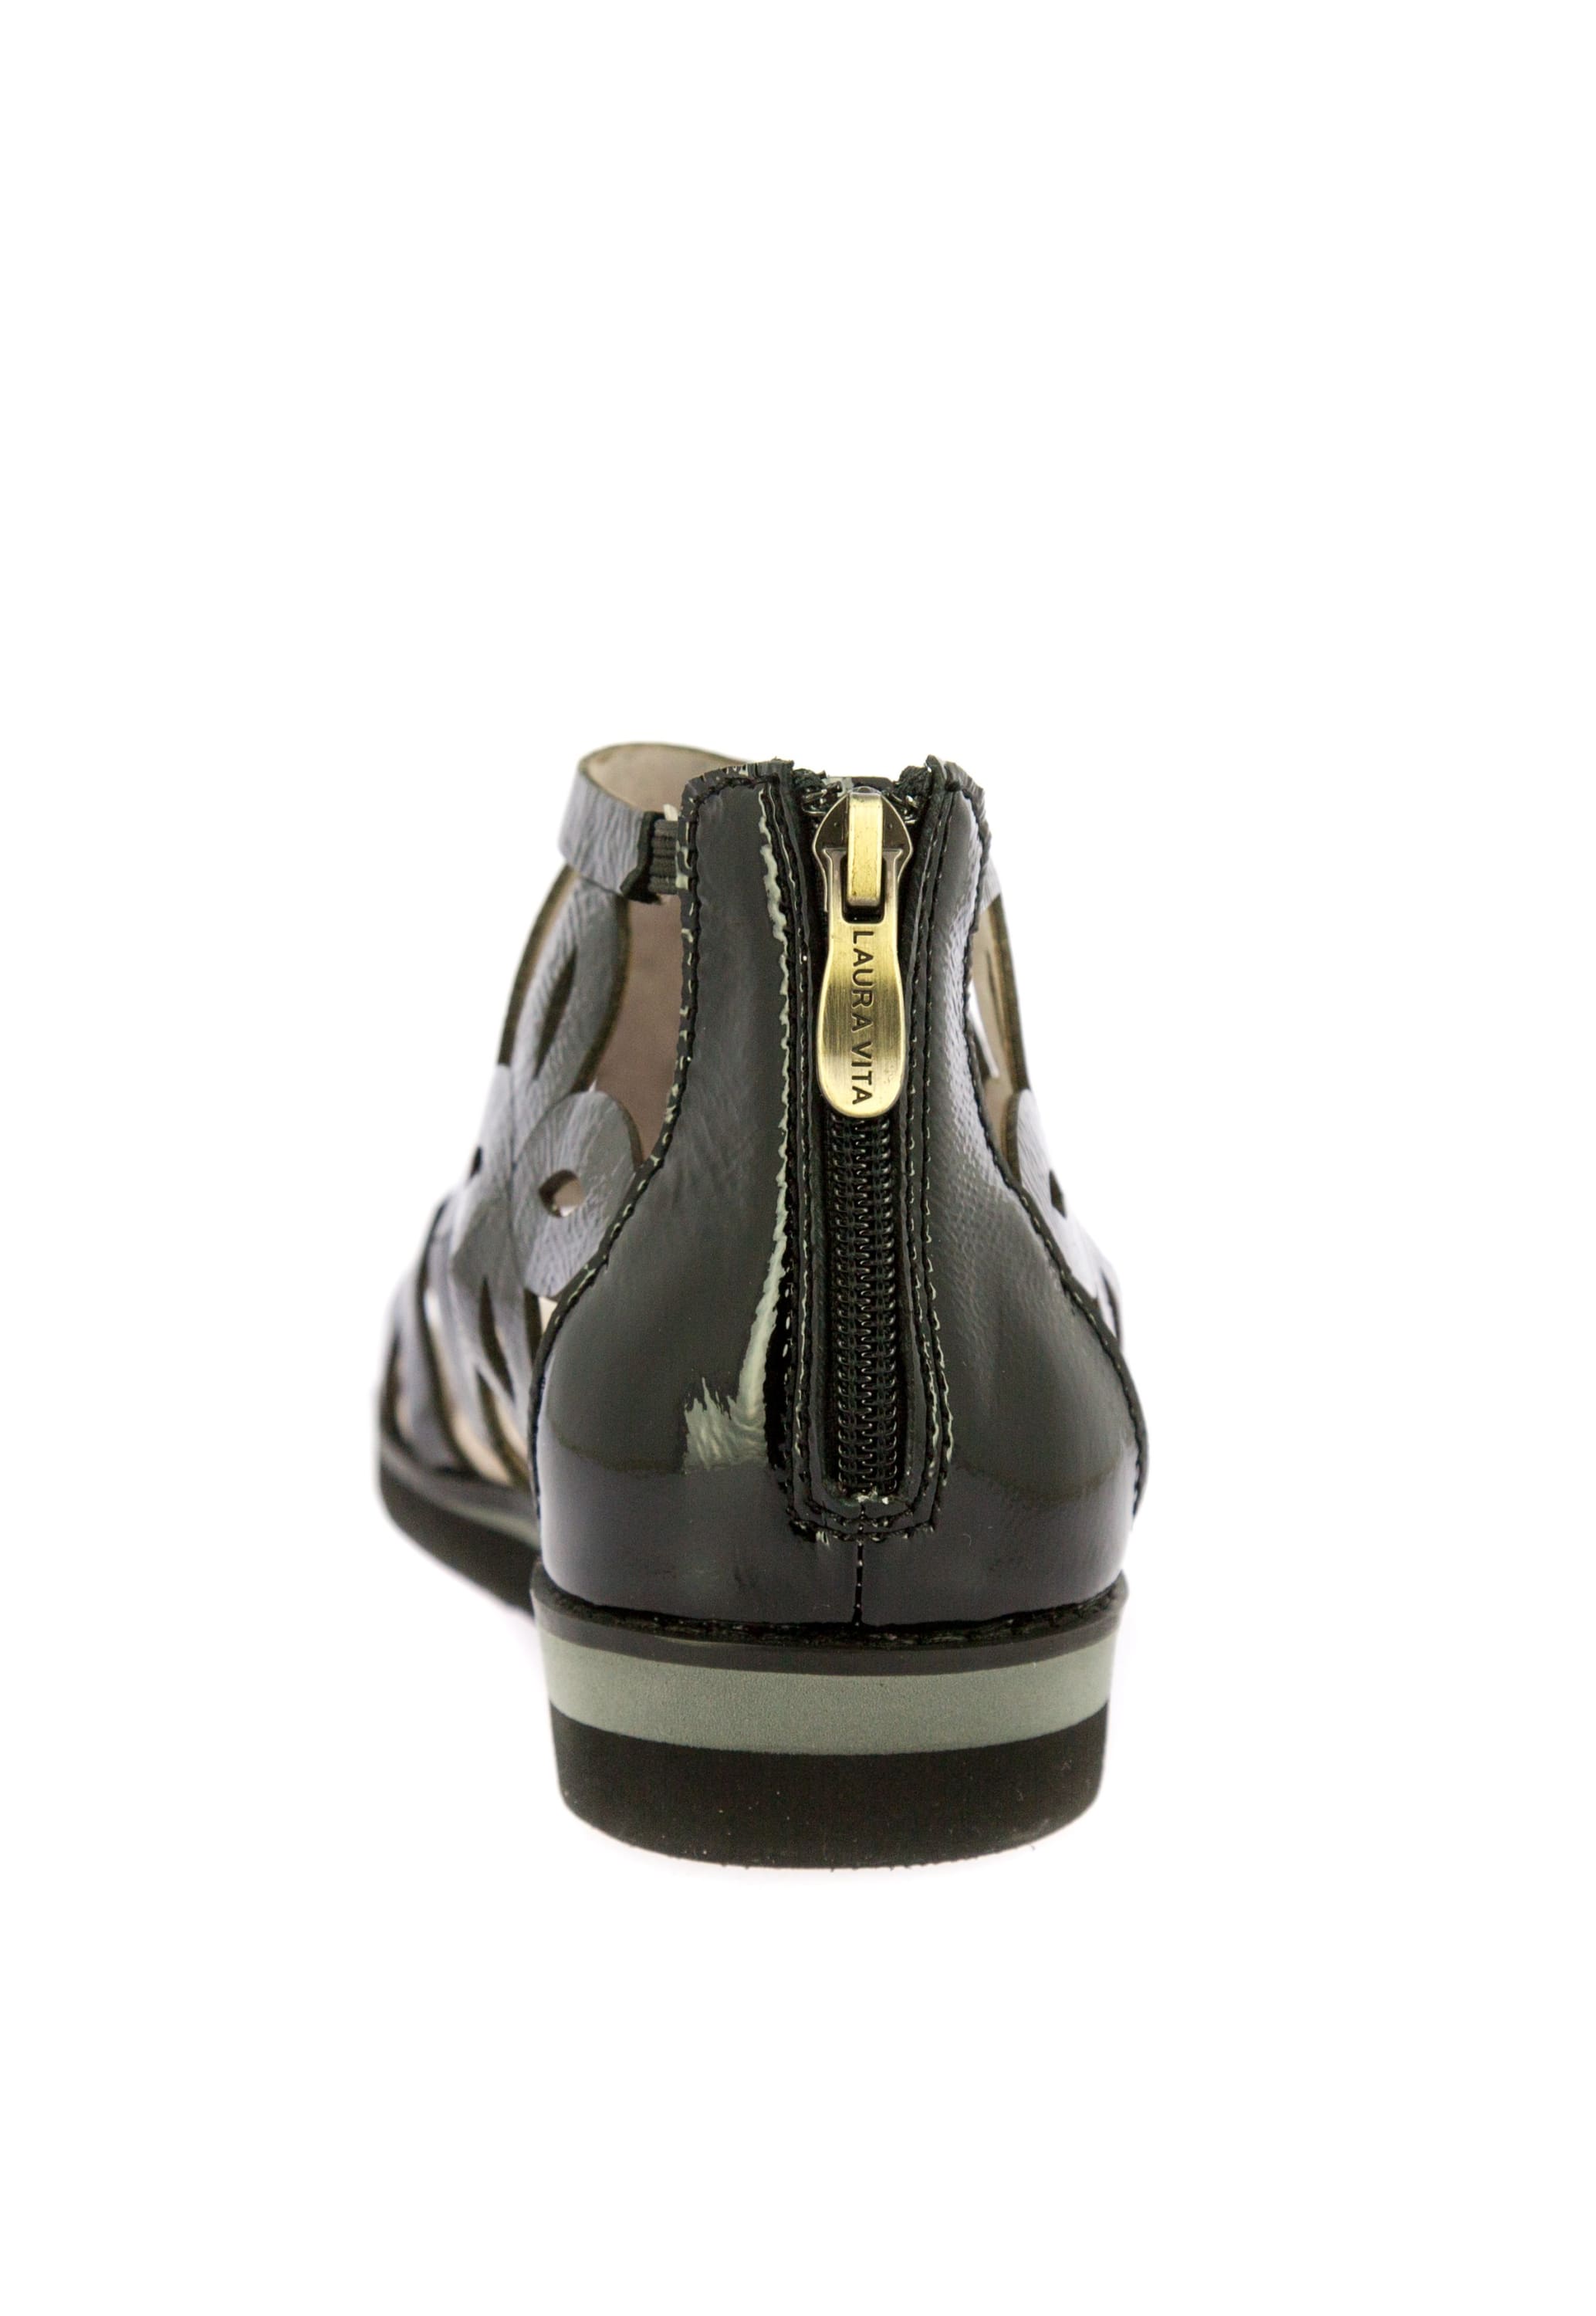 Chaussure FECLICIEO079 - Sandale